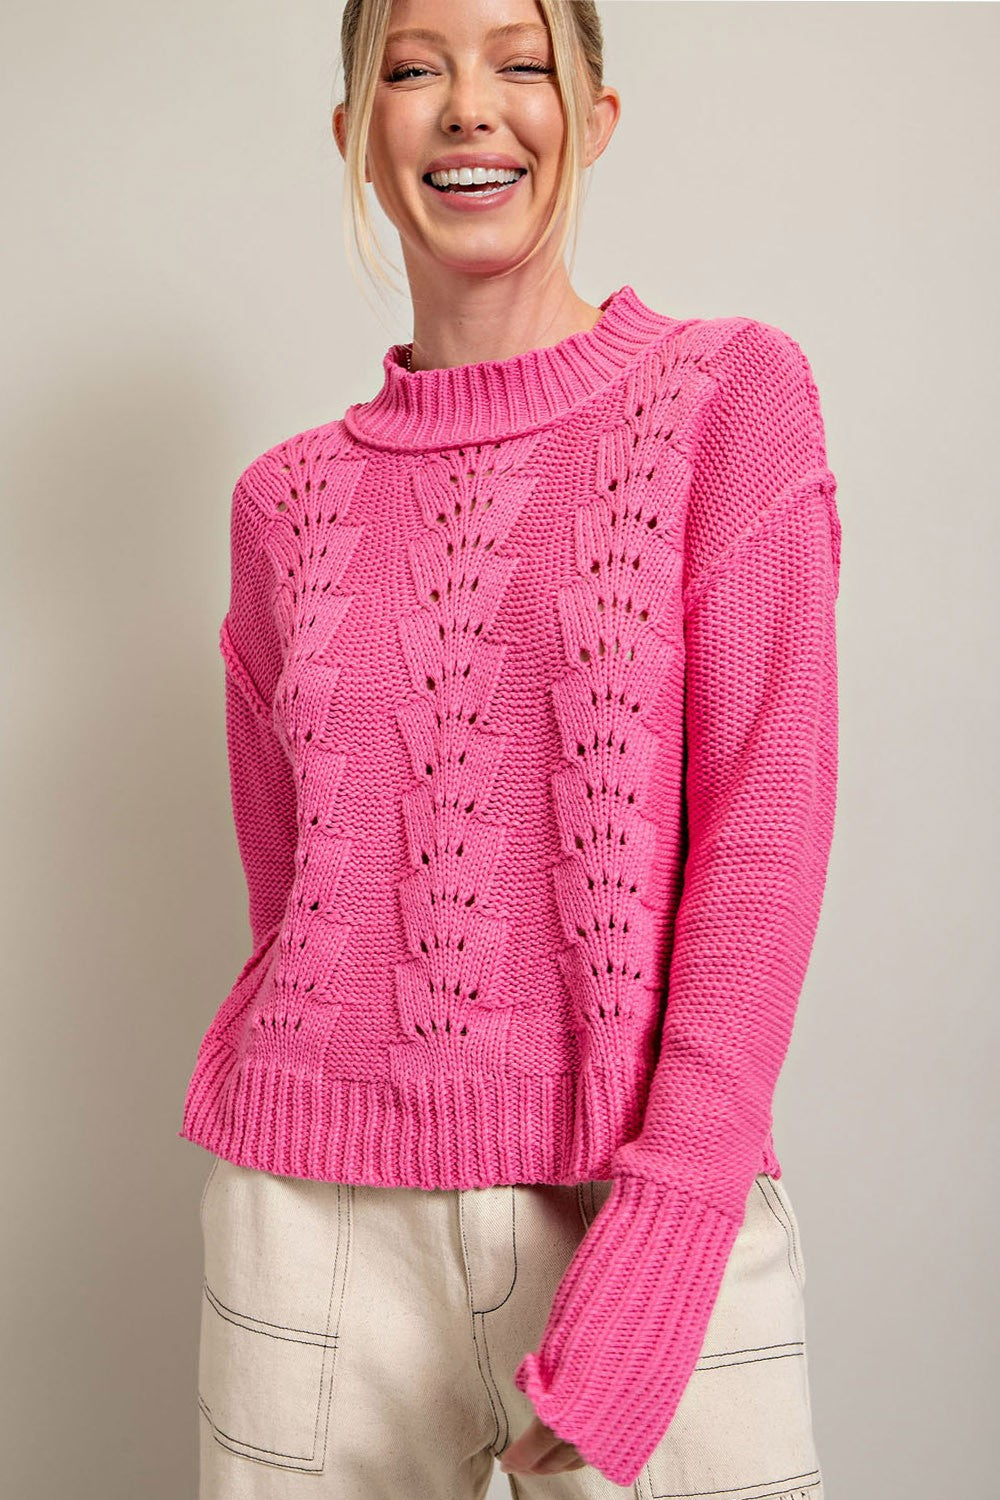 Crochet Long Sleeve Knit Top in Hot Pink